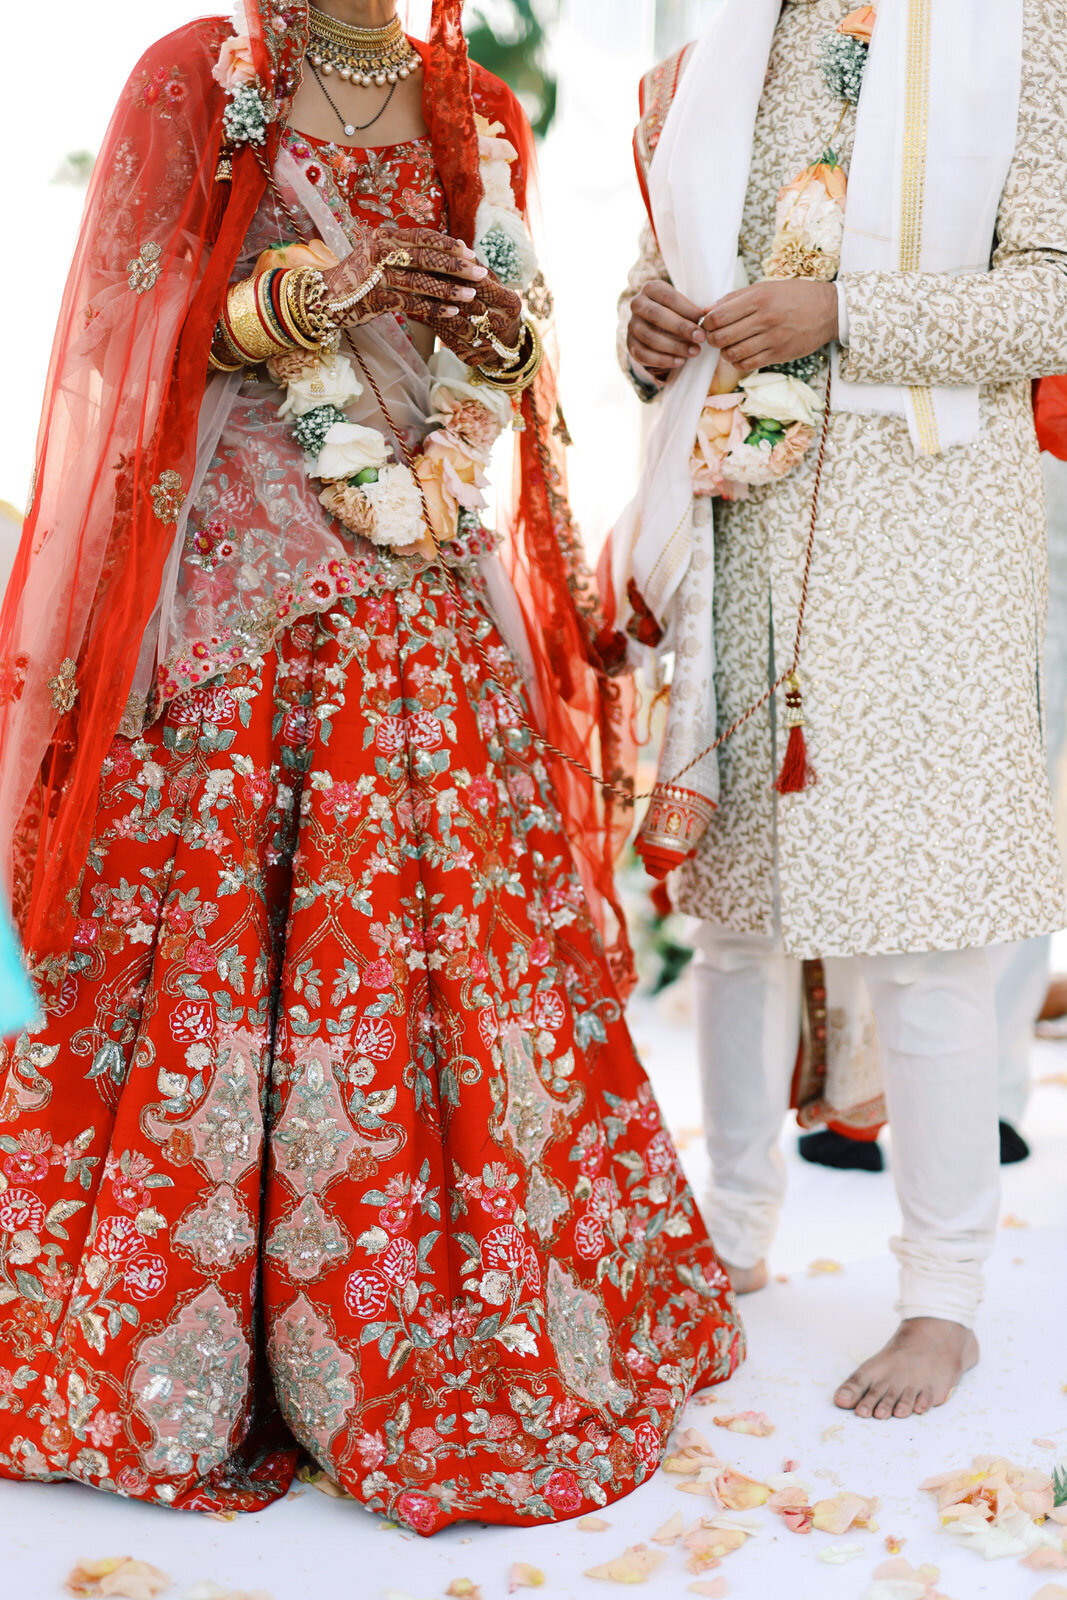 LA Wedding Photography for a Modern Indian Wedding 11